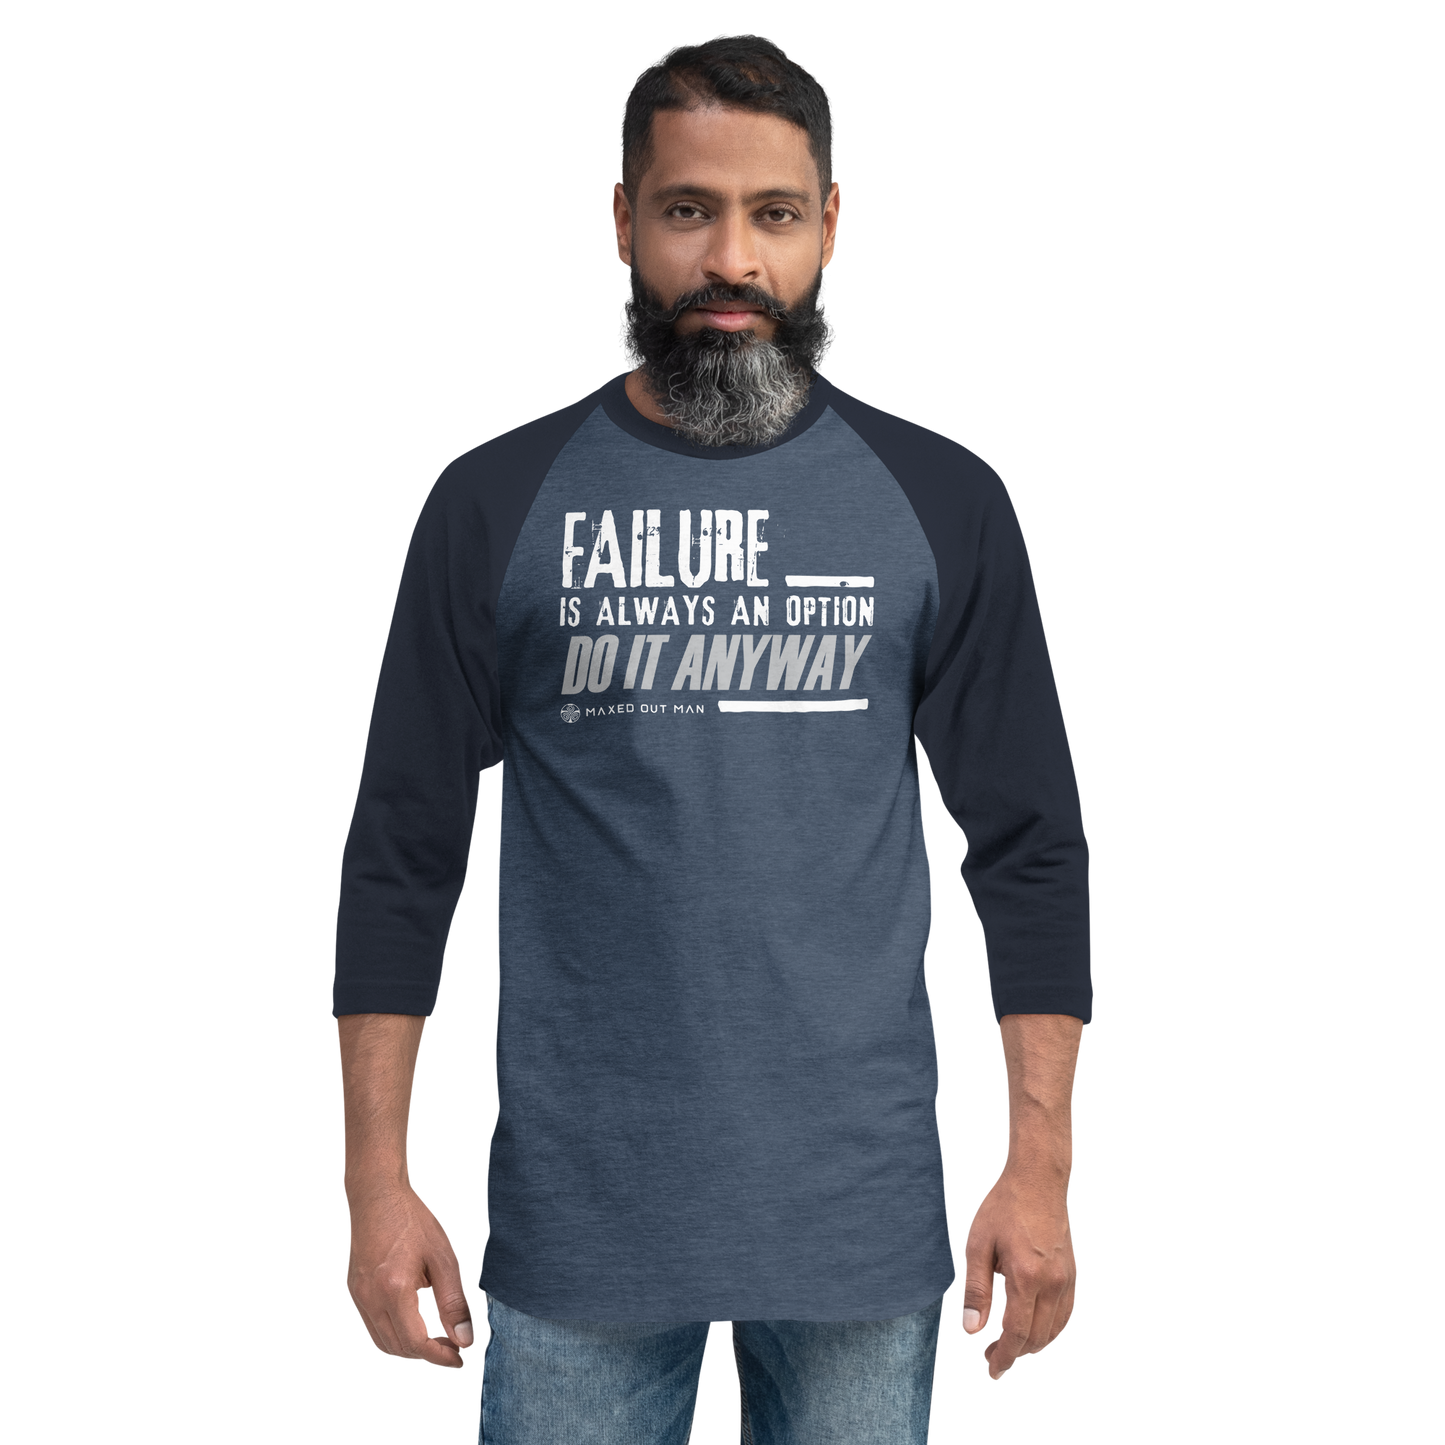 Failure is Always an Option 3/4 Sleeve Raglan Shirt - Darker Colors